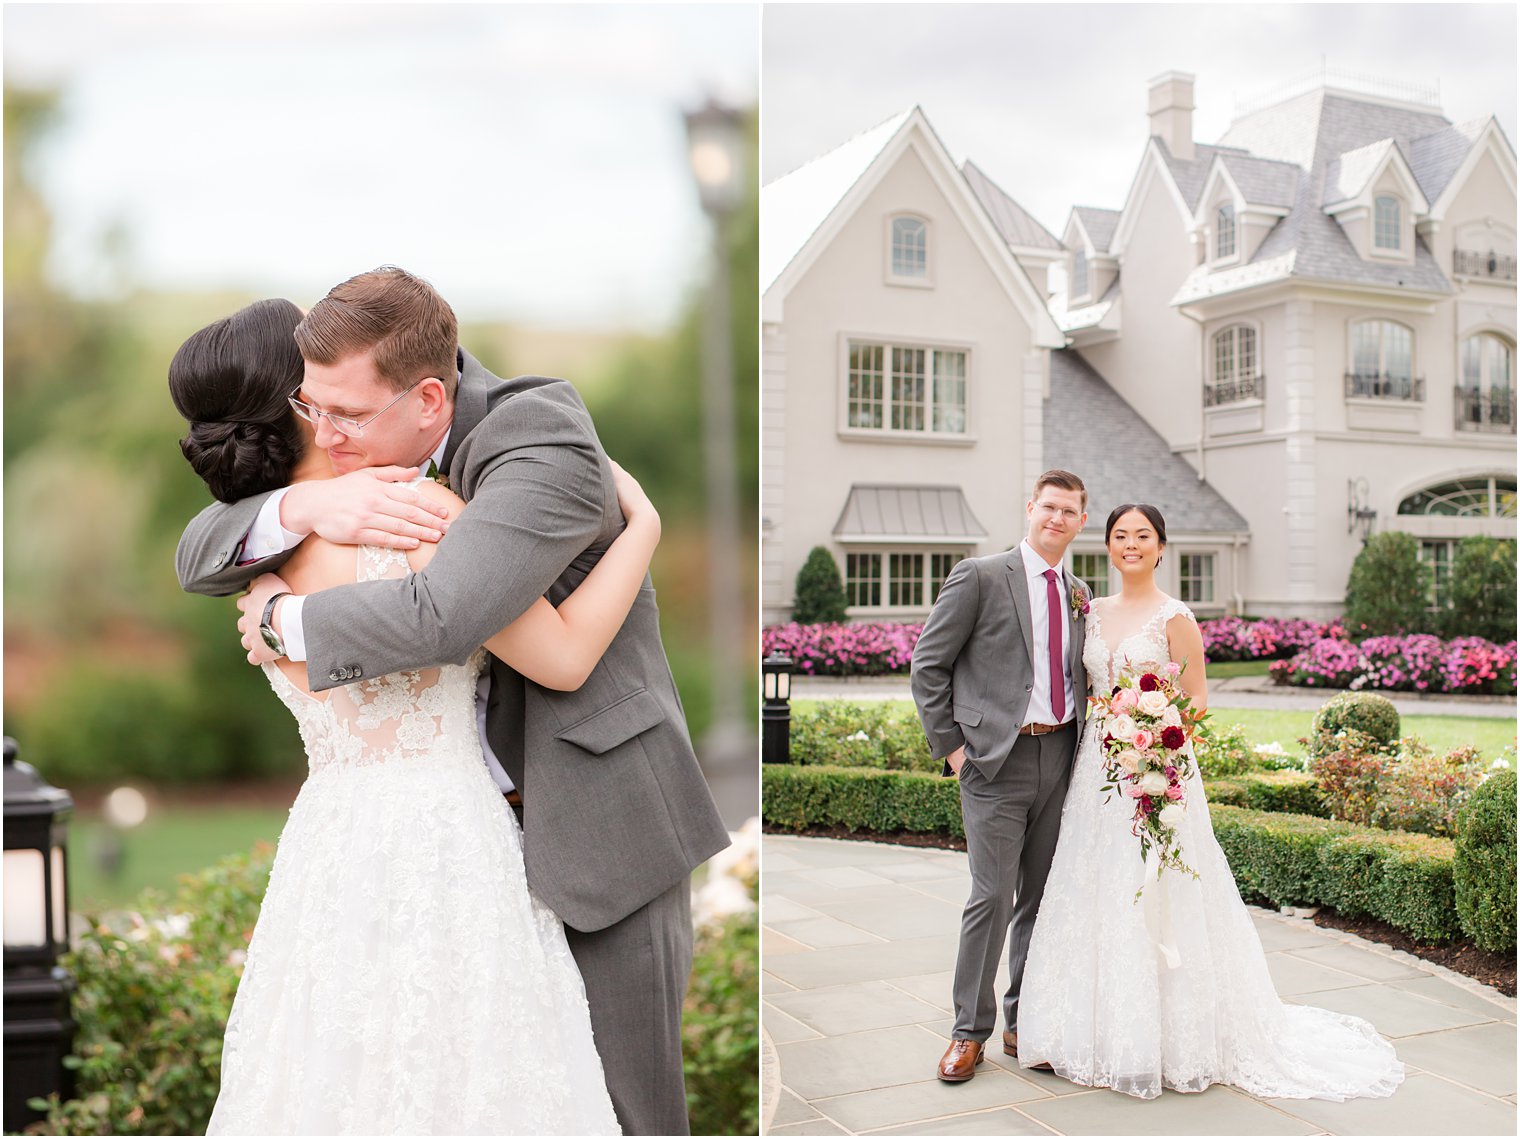 Park Chateau Estate wedding day photos by Idalia Photography